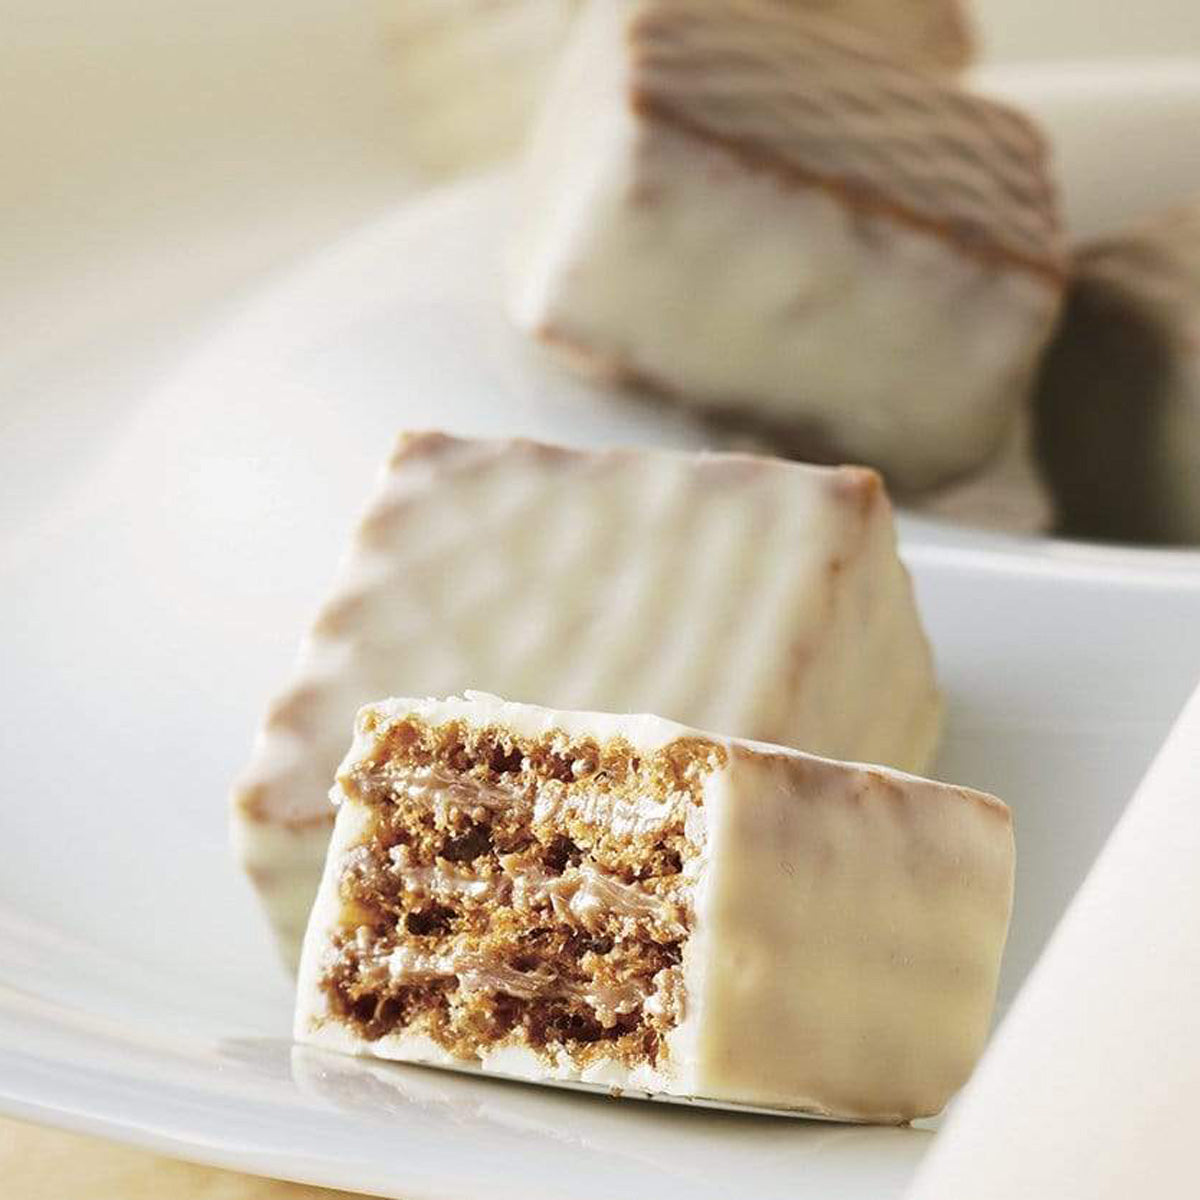 ROYCE' Chocolate - Chocolate Wafers "Tiramisu Cream" - Image shows white chocolate wafers on a white plate. Background is white with blurry white chocolate wafers.